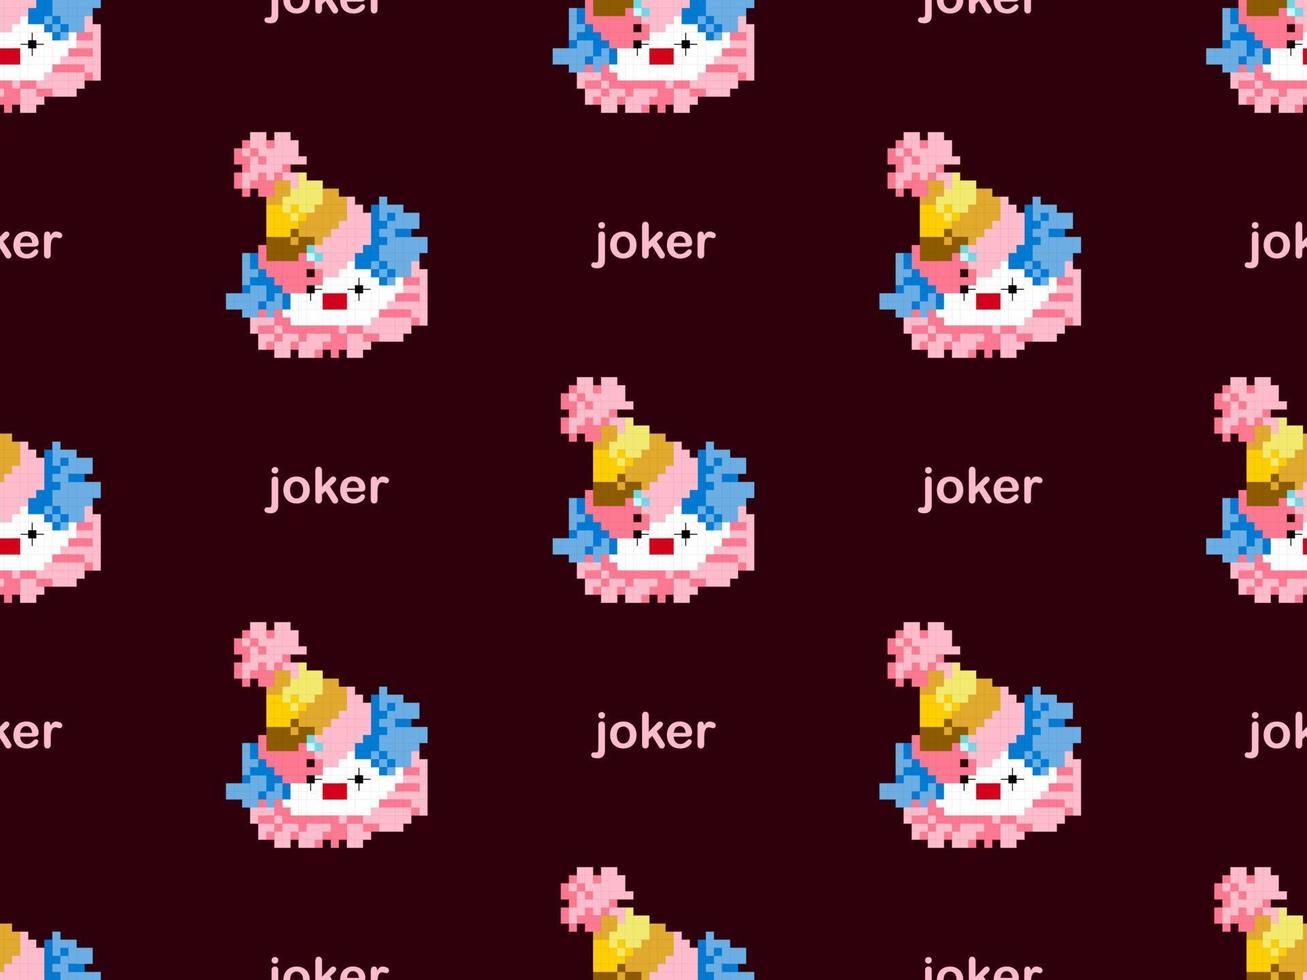 Joker cartoon character seamless pattern on pink background. Pixel style vector